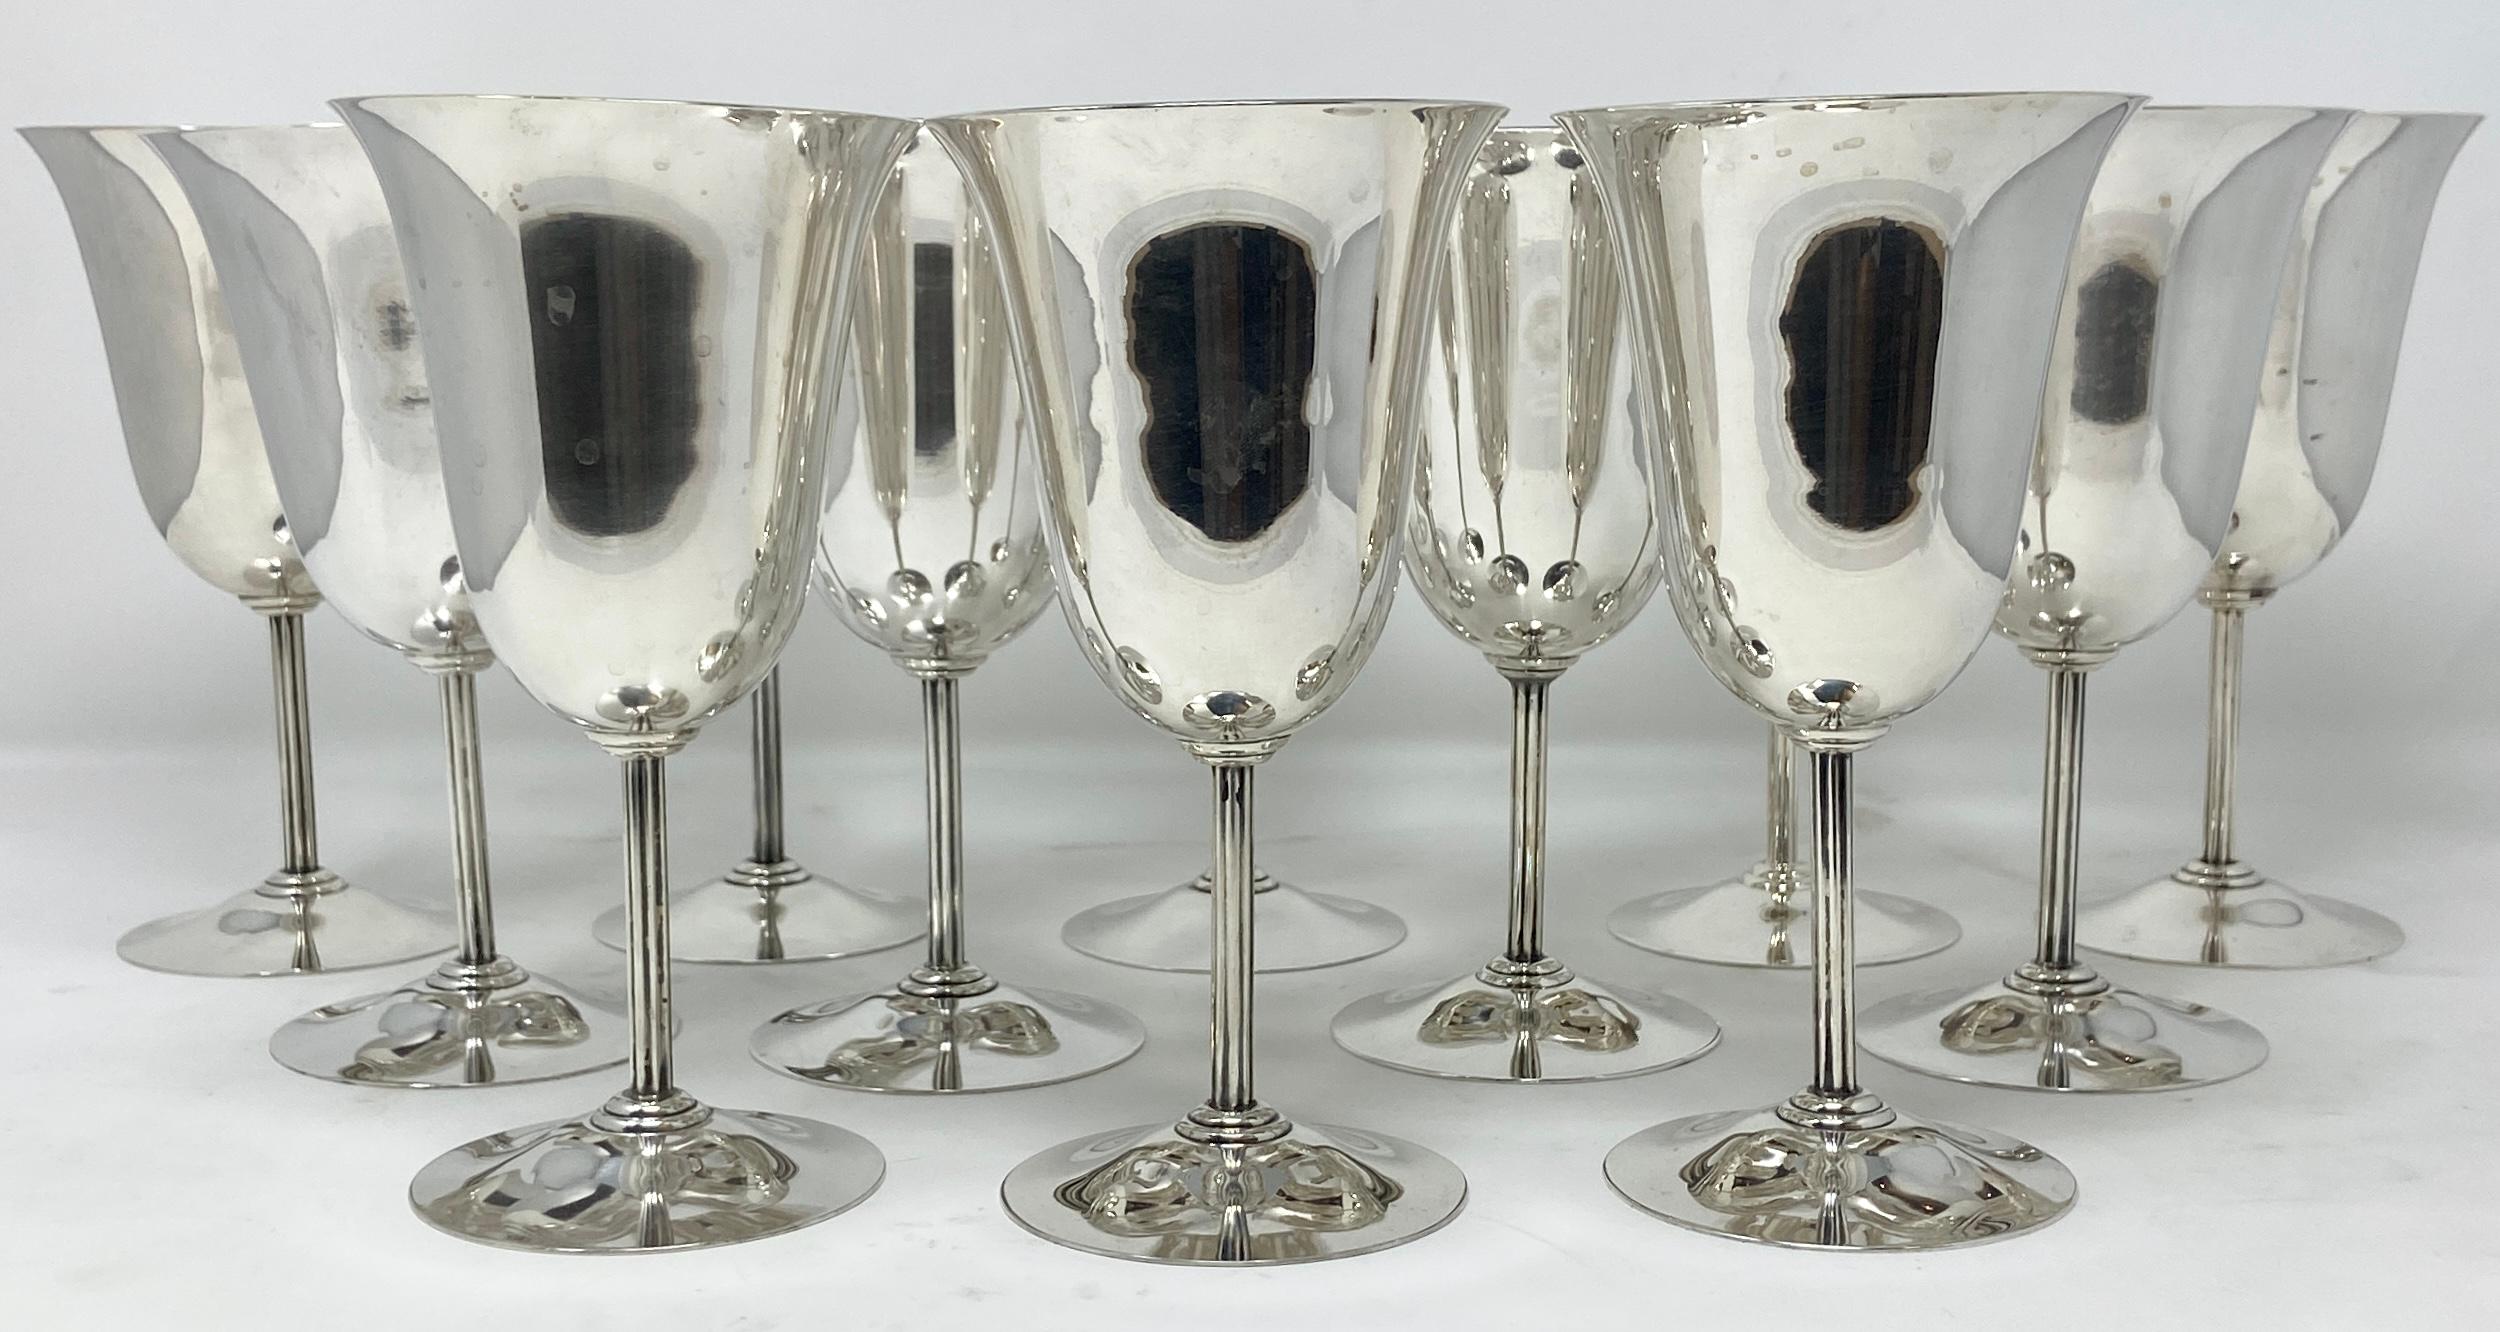 Set of 12 Estate American sterling silver wine / water goblets hallmarked 